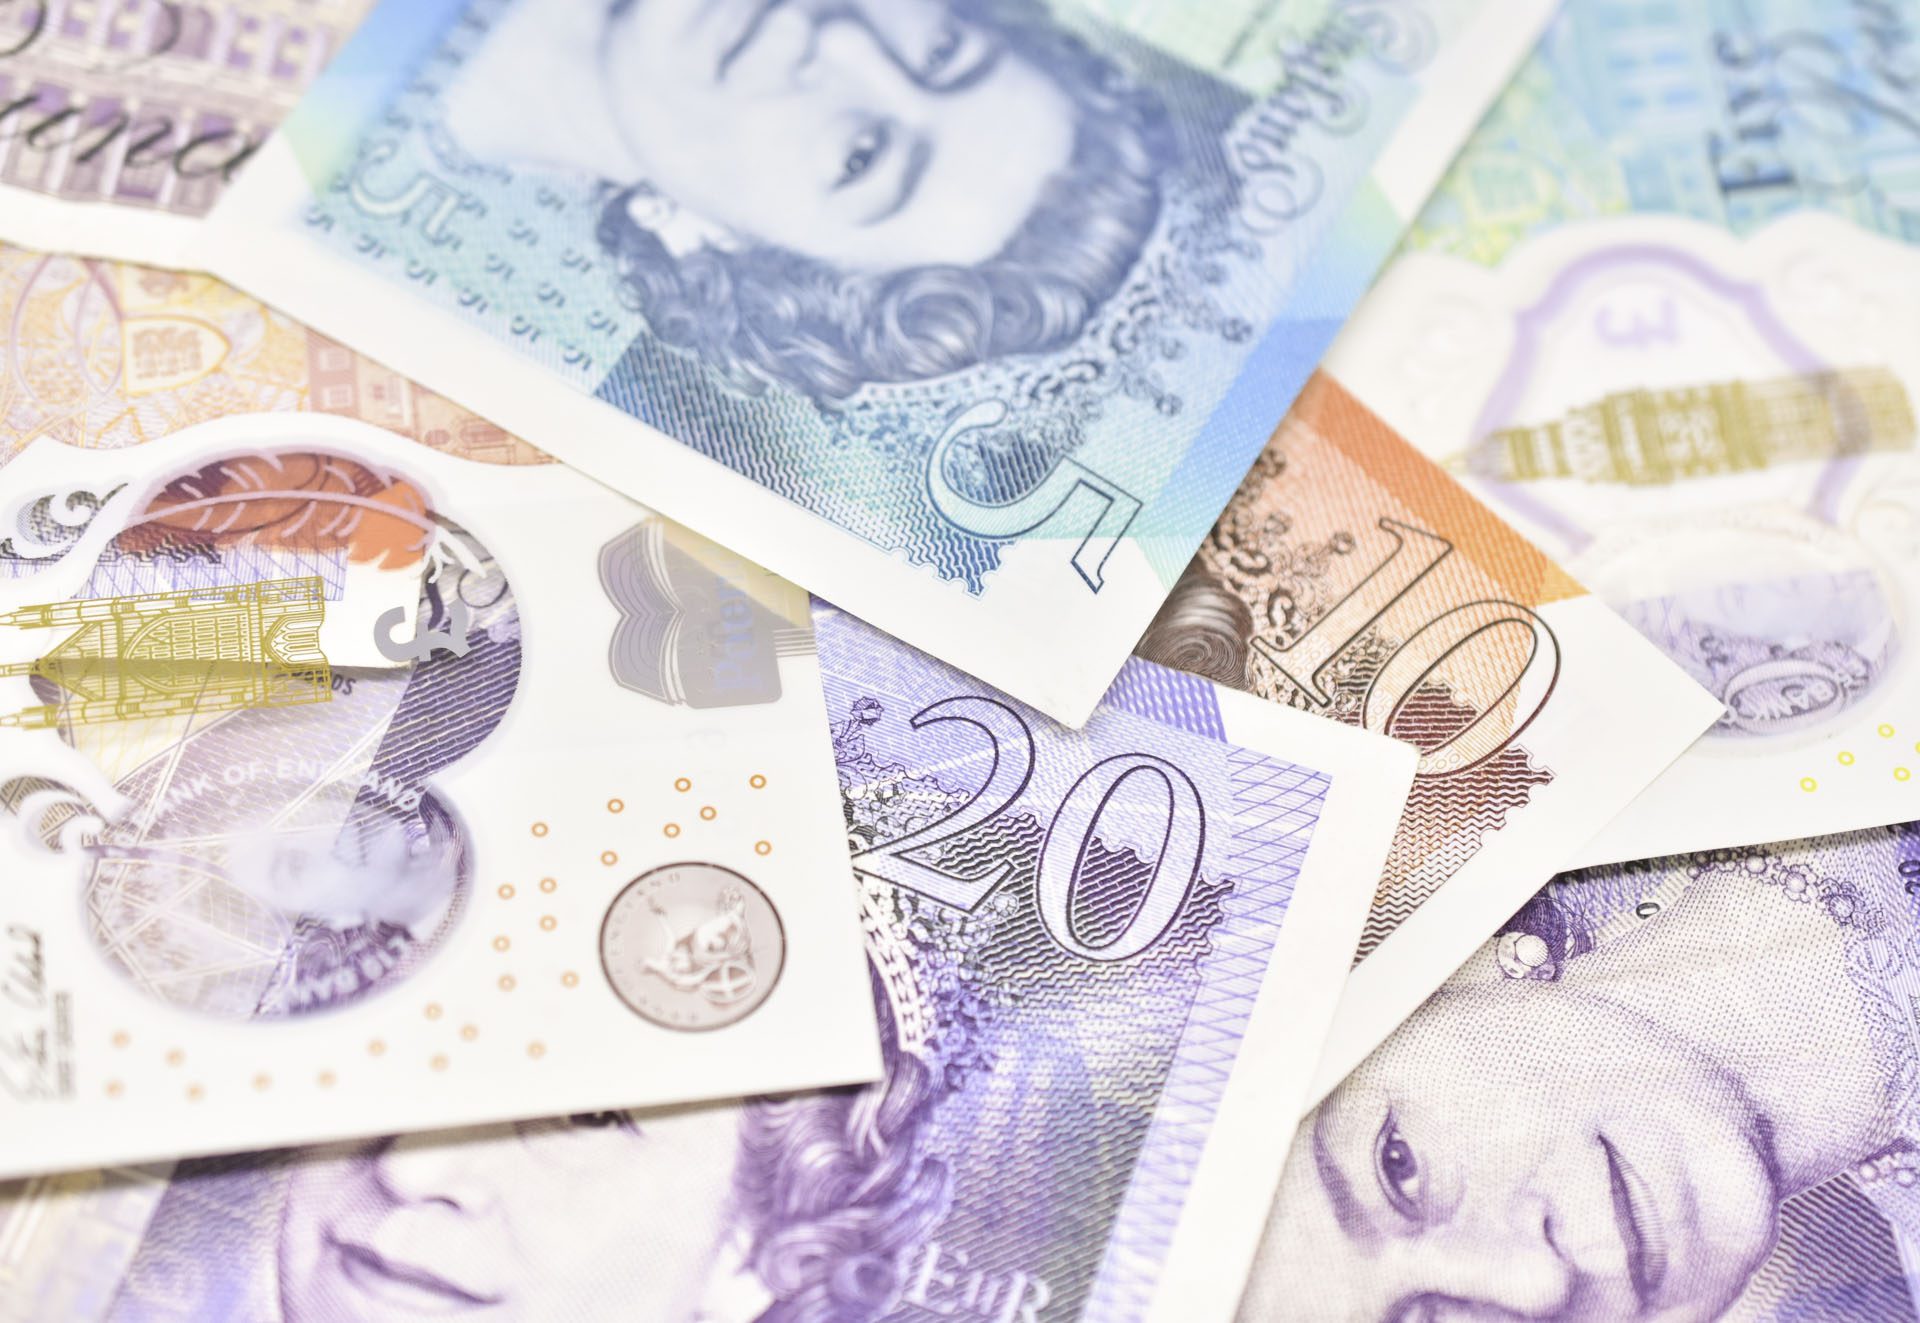 Stacks of UK banknotes